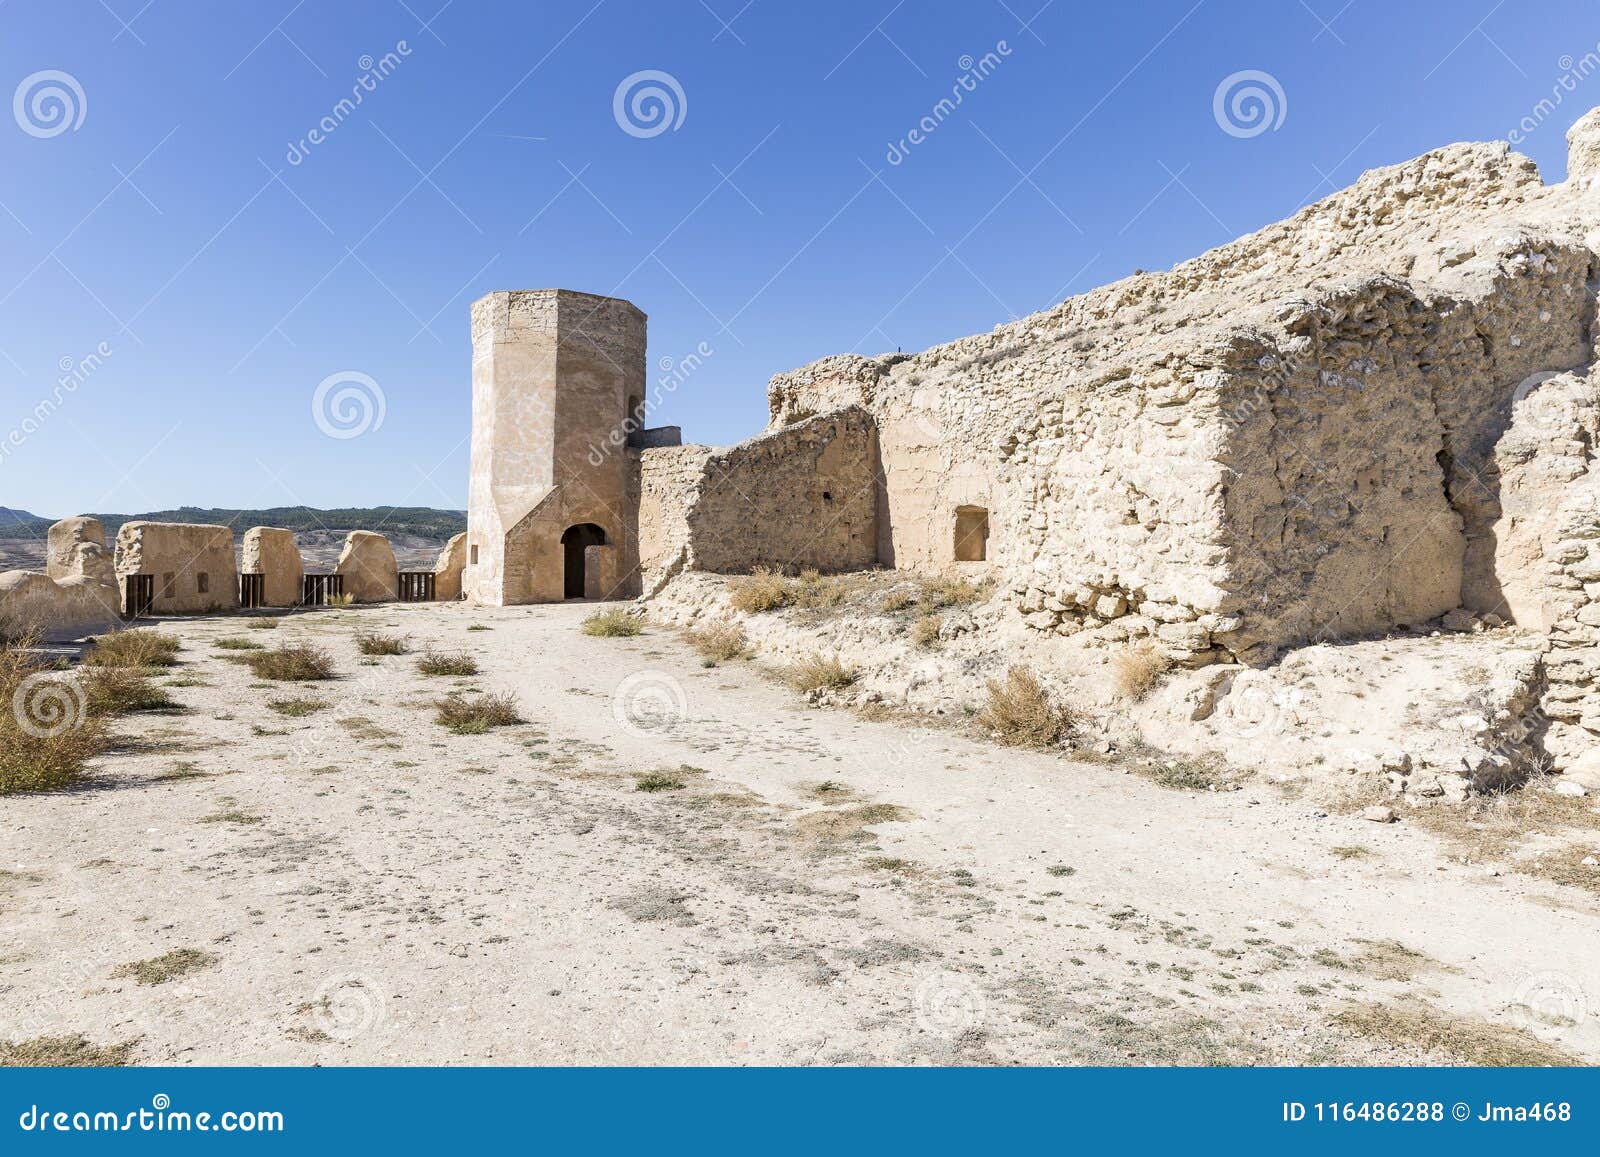 inside the ayub main castle in the city of calatayud